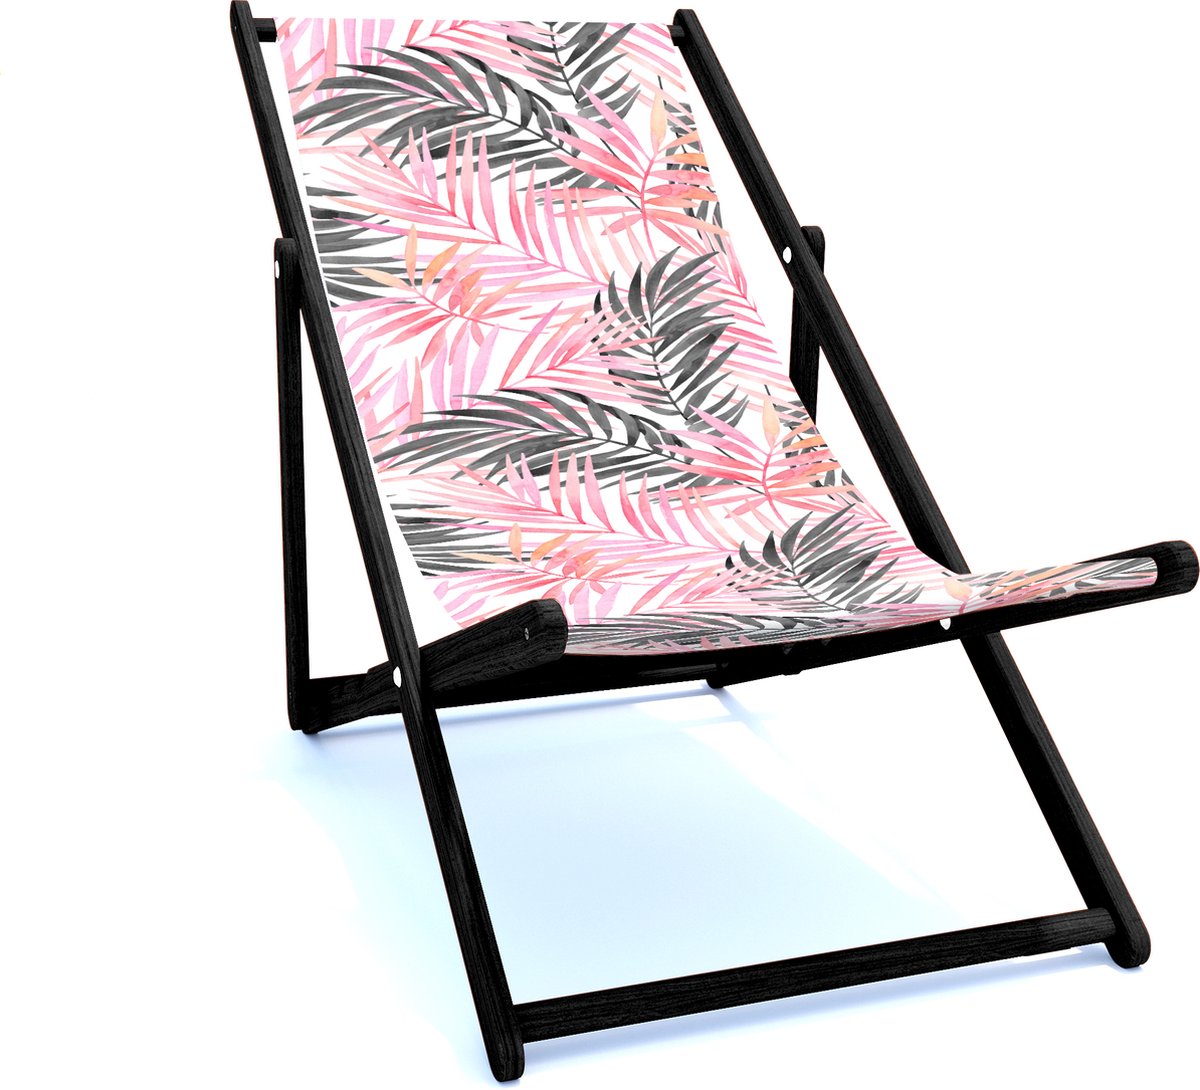 Holtaz Strandstoel Hout Inklapbaar Comfortabele Zonnebed Ligbed met verstelbare Lighoogte met stoffen Bladeren zwart houten frame